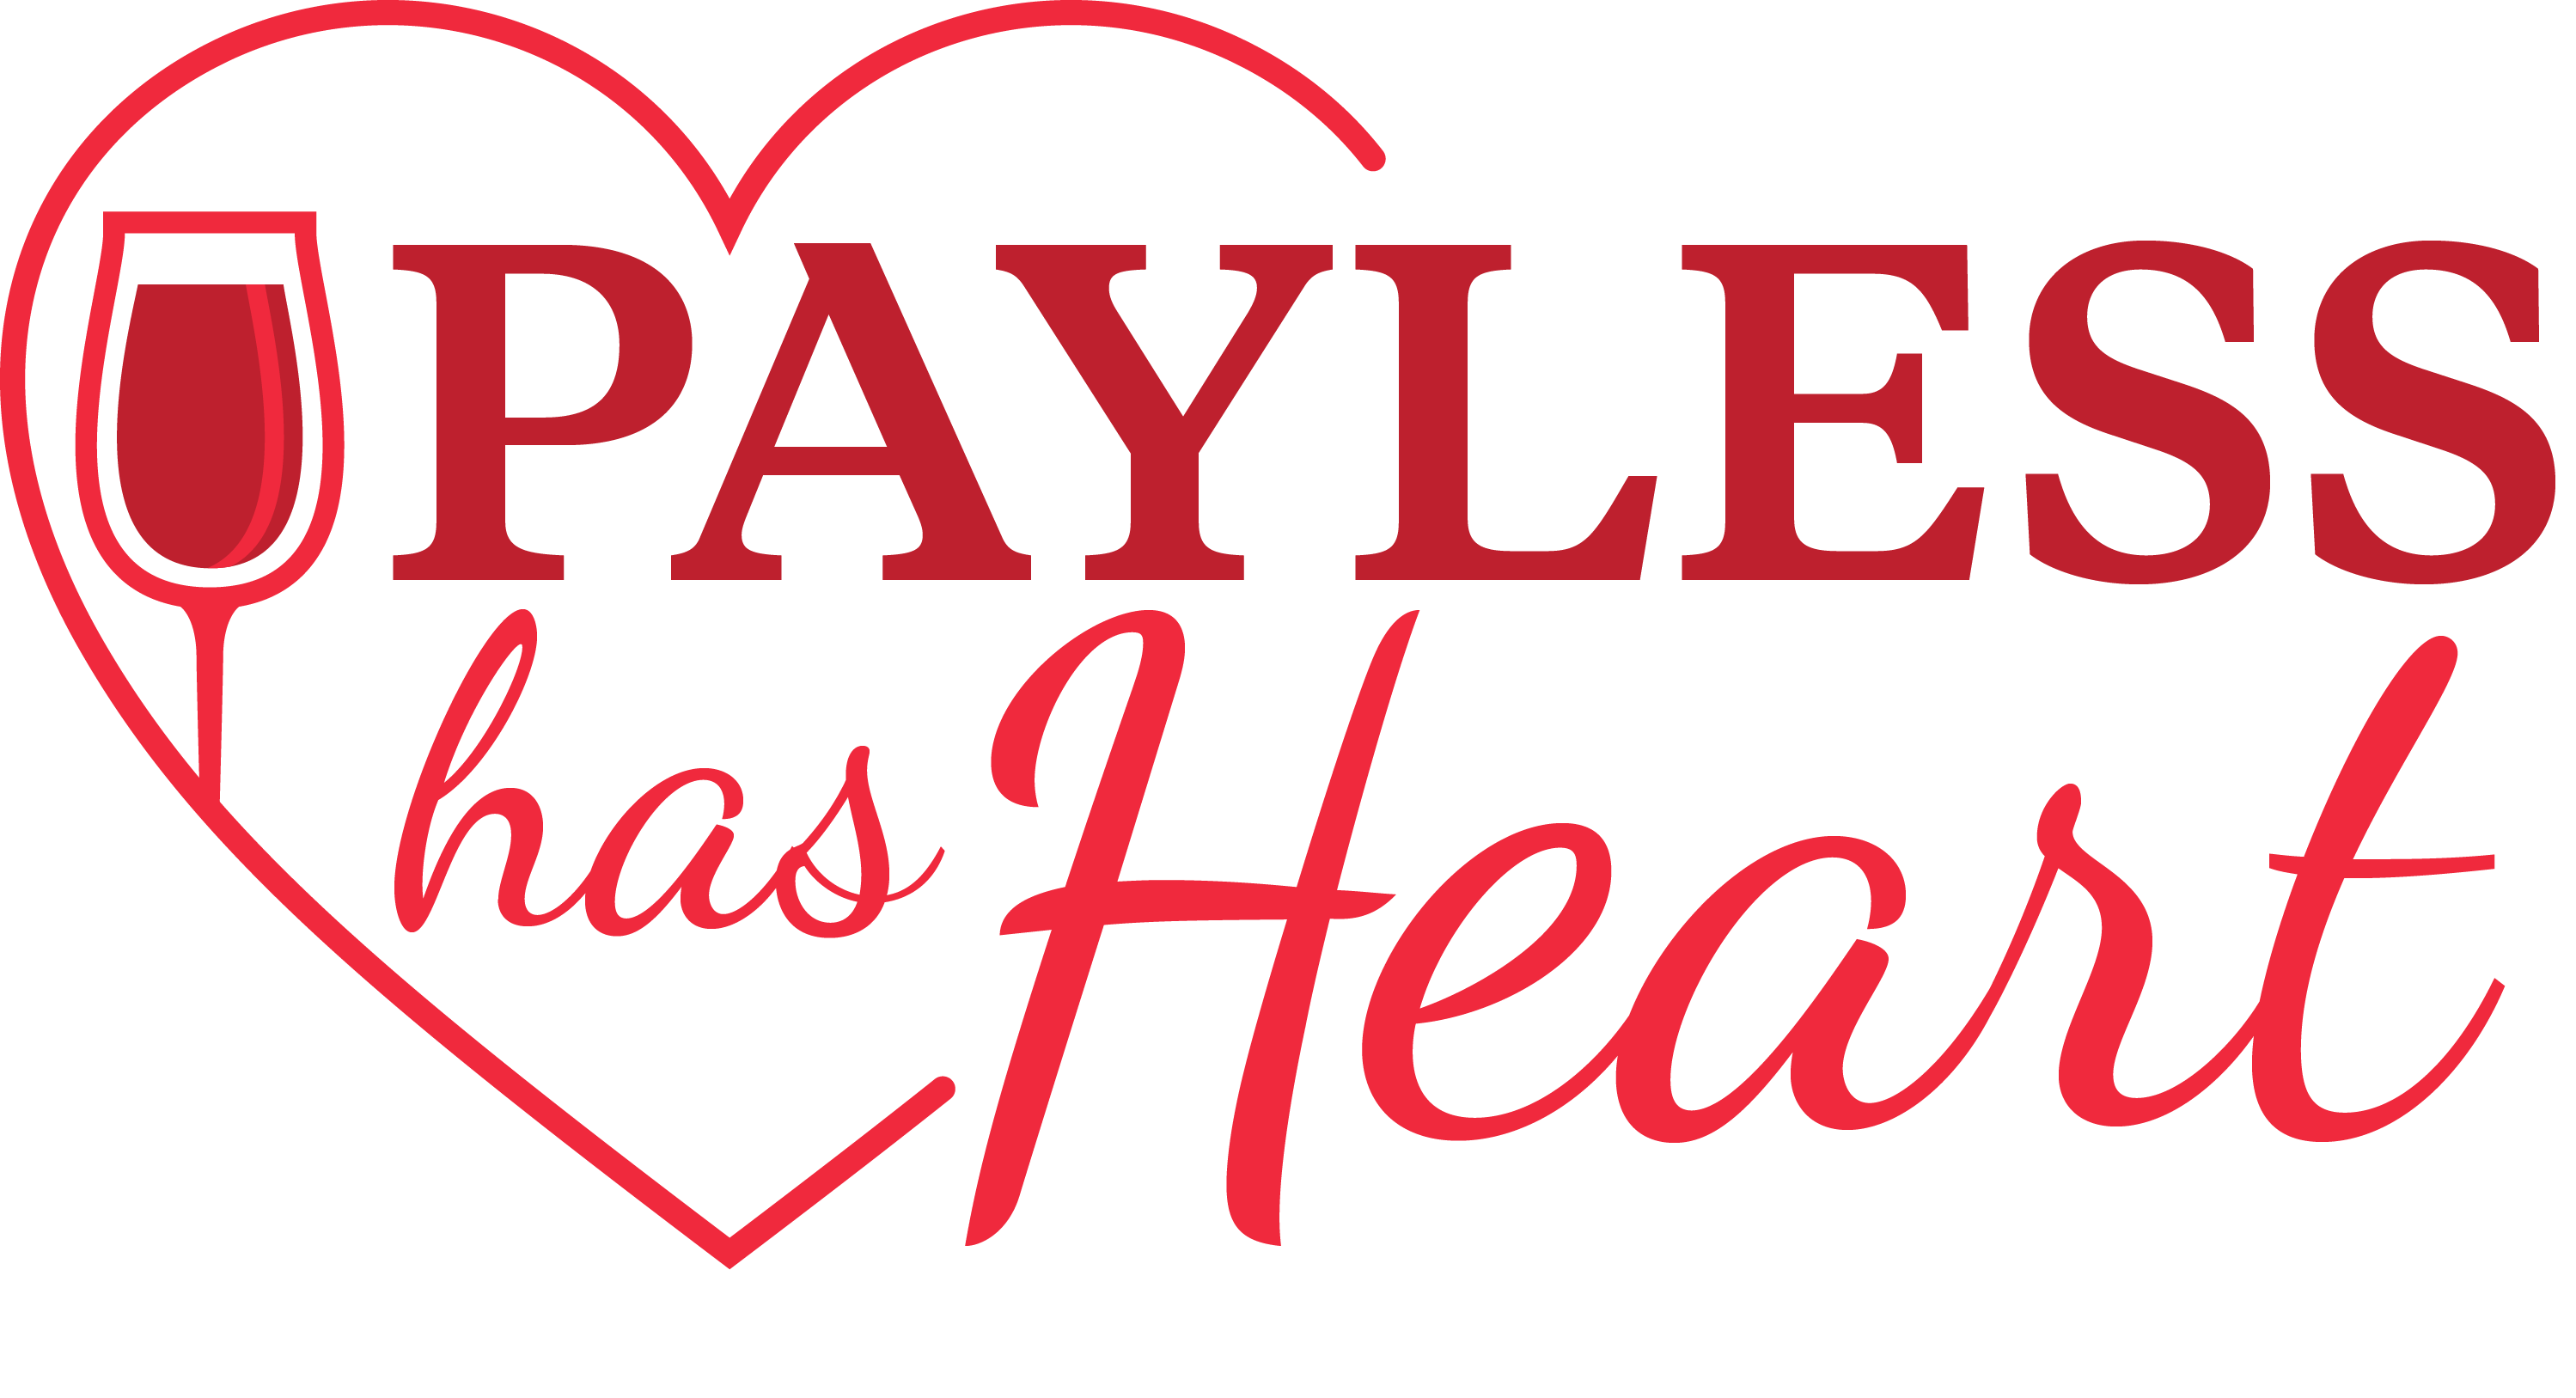 Payless Has Heart Logo 2